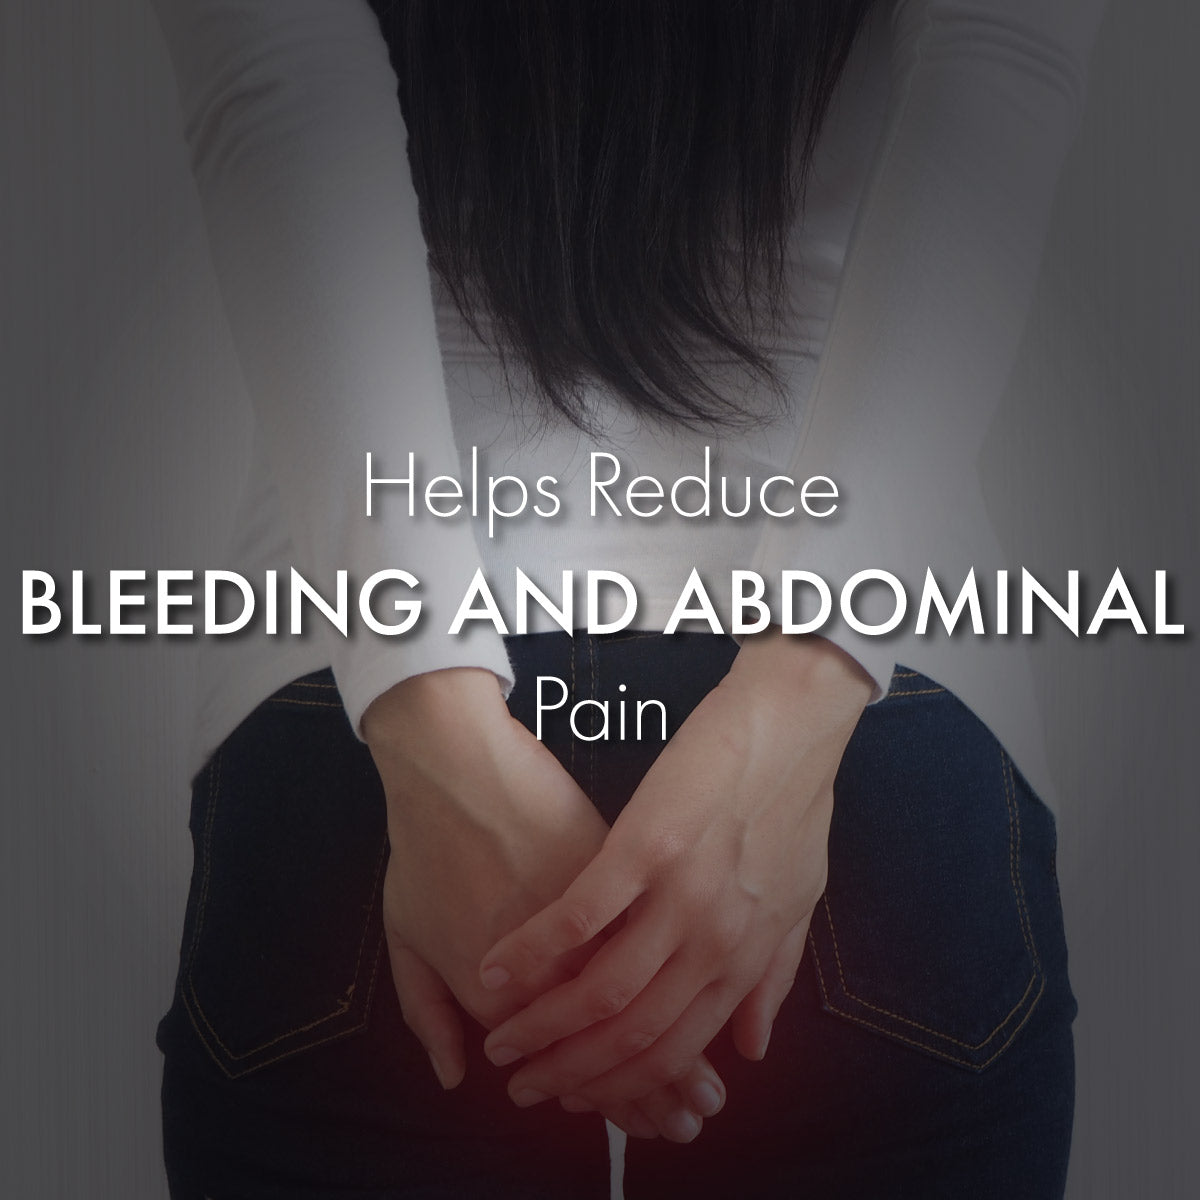 Period Wellness: Helps Regulate Period Pain, Cramps & Controls Bleeding